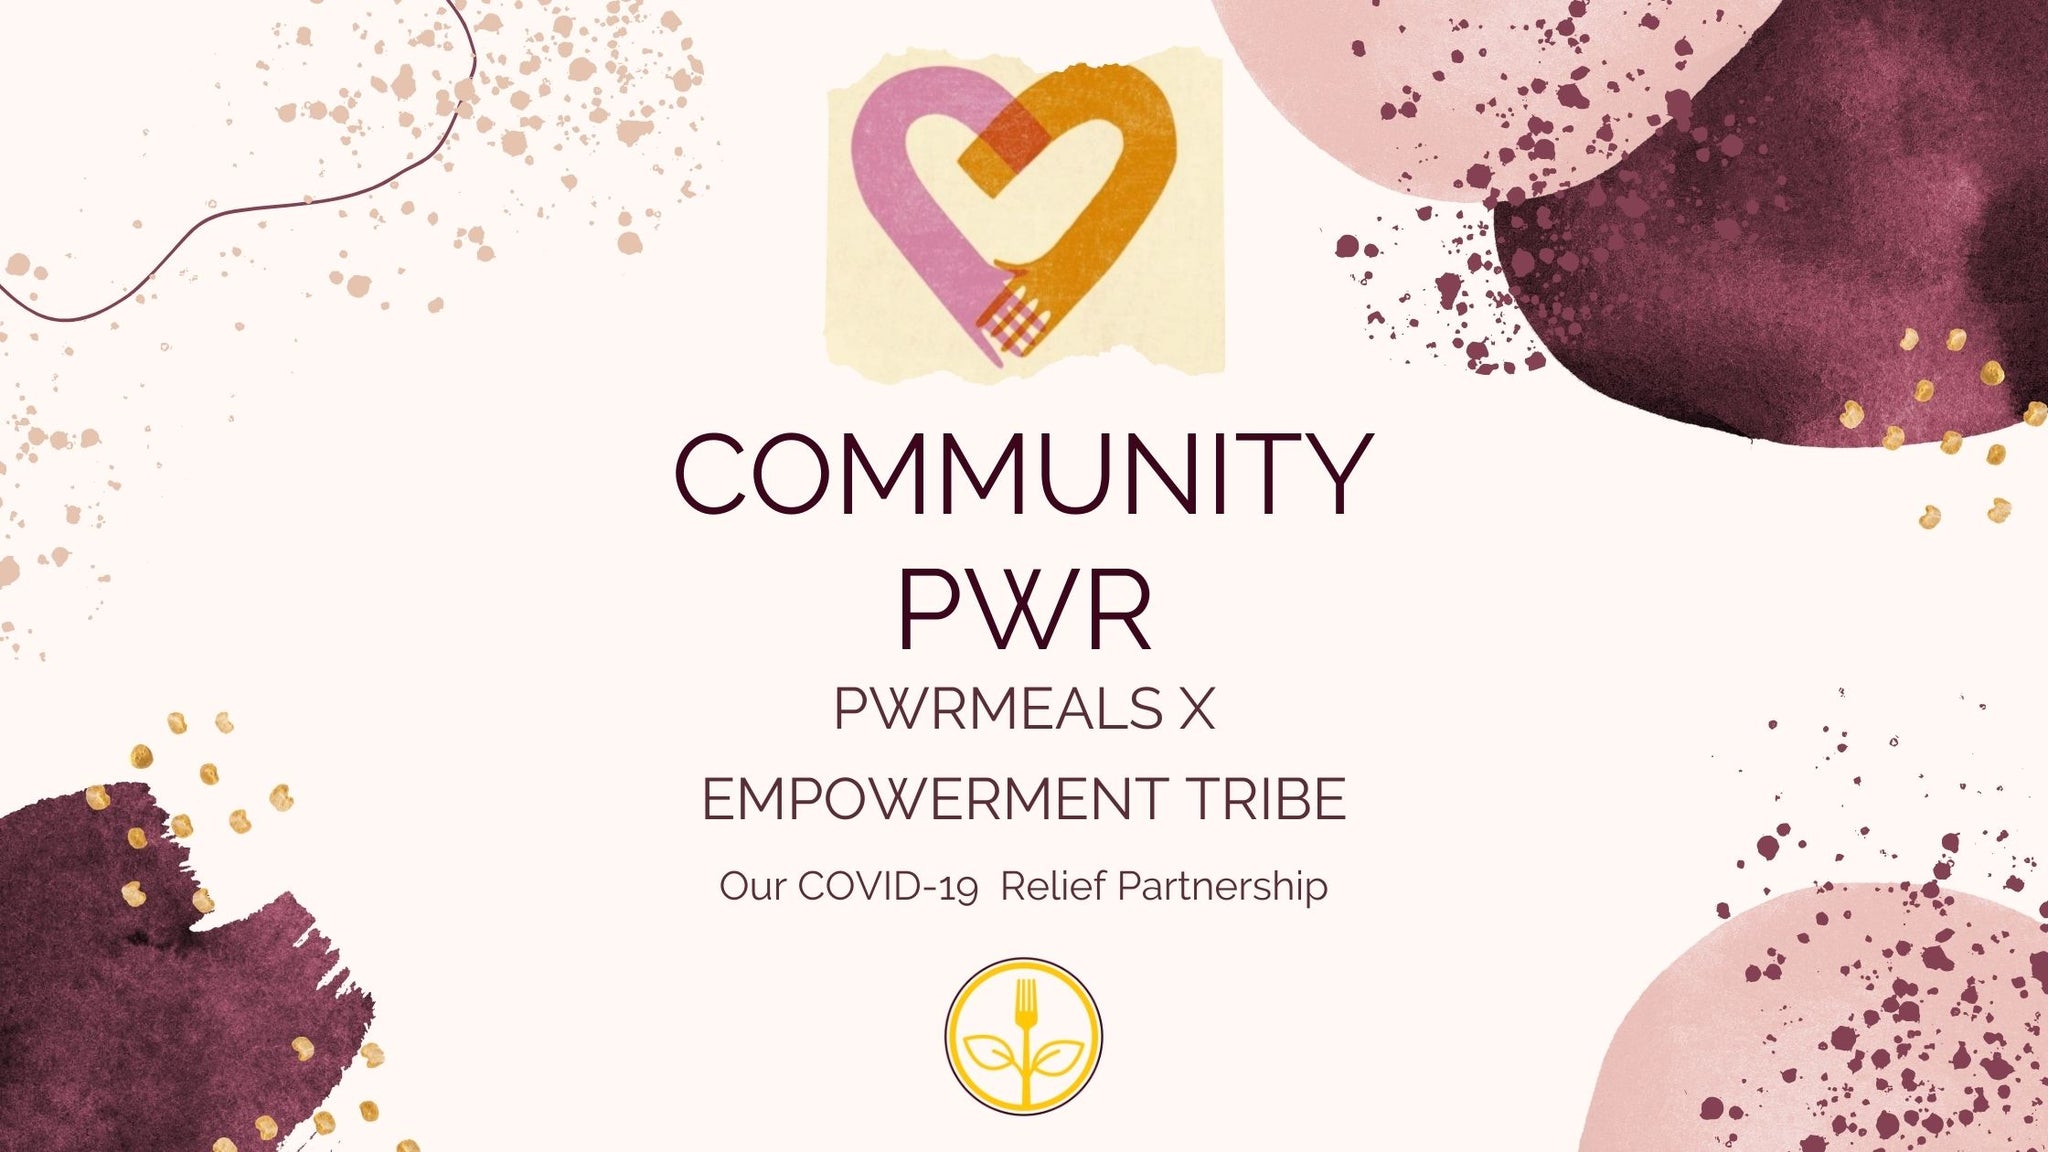 Empowerment Tribe × Pwrmeals: Community PWR